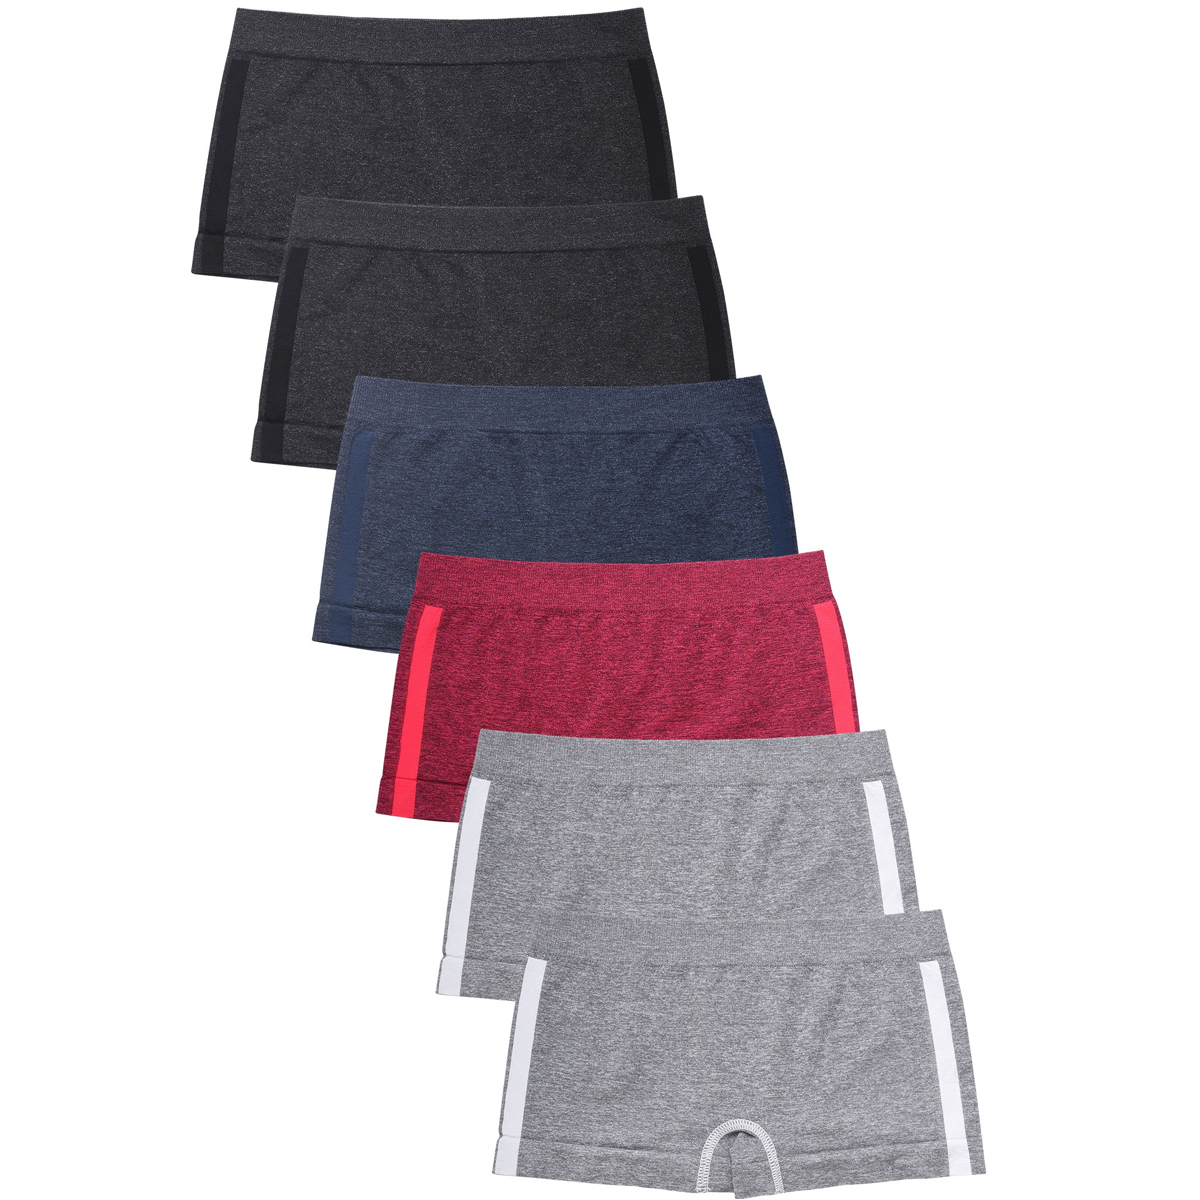 Wholesale Girls' Boyshort Panties, Size Medium, 6 Colors - DollarDays